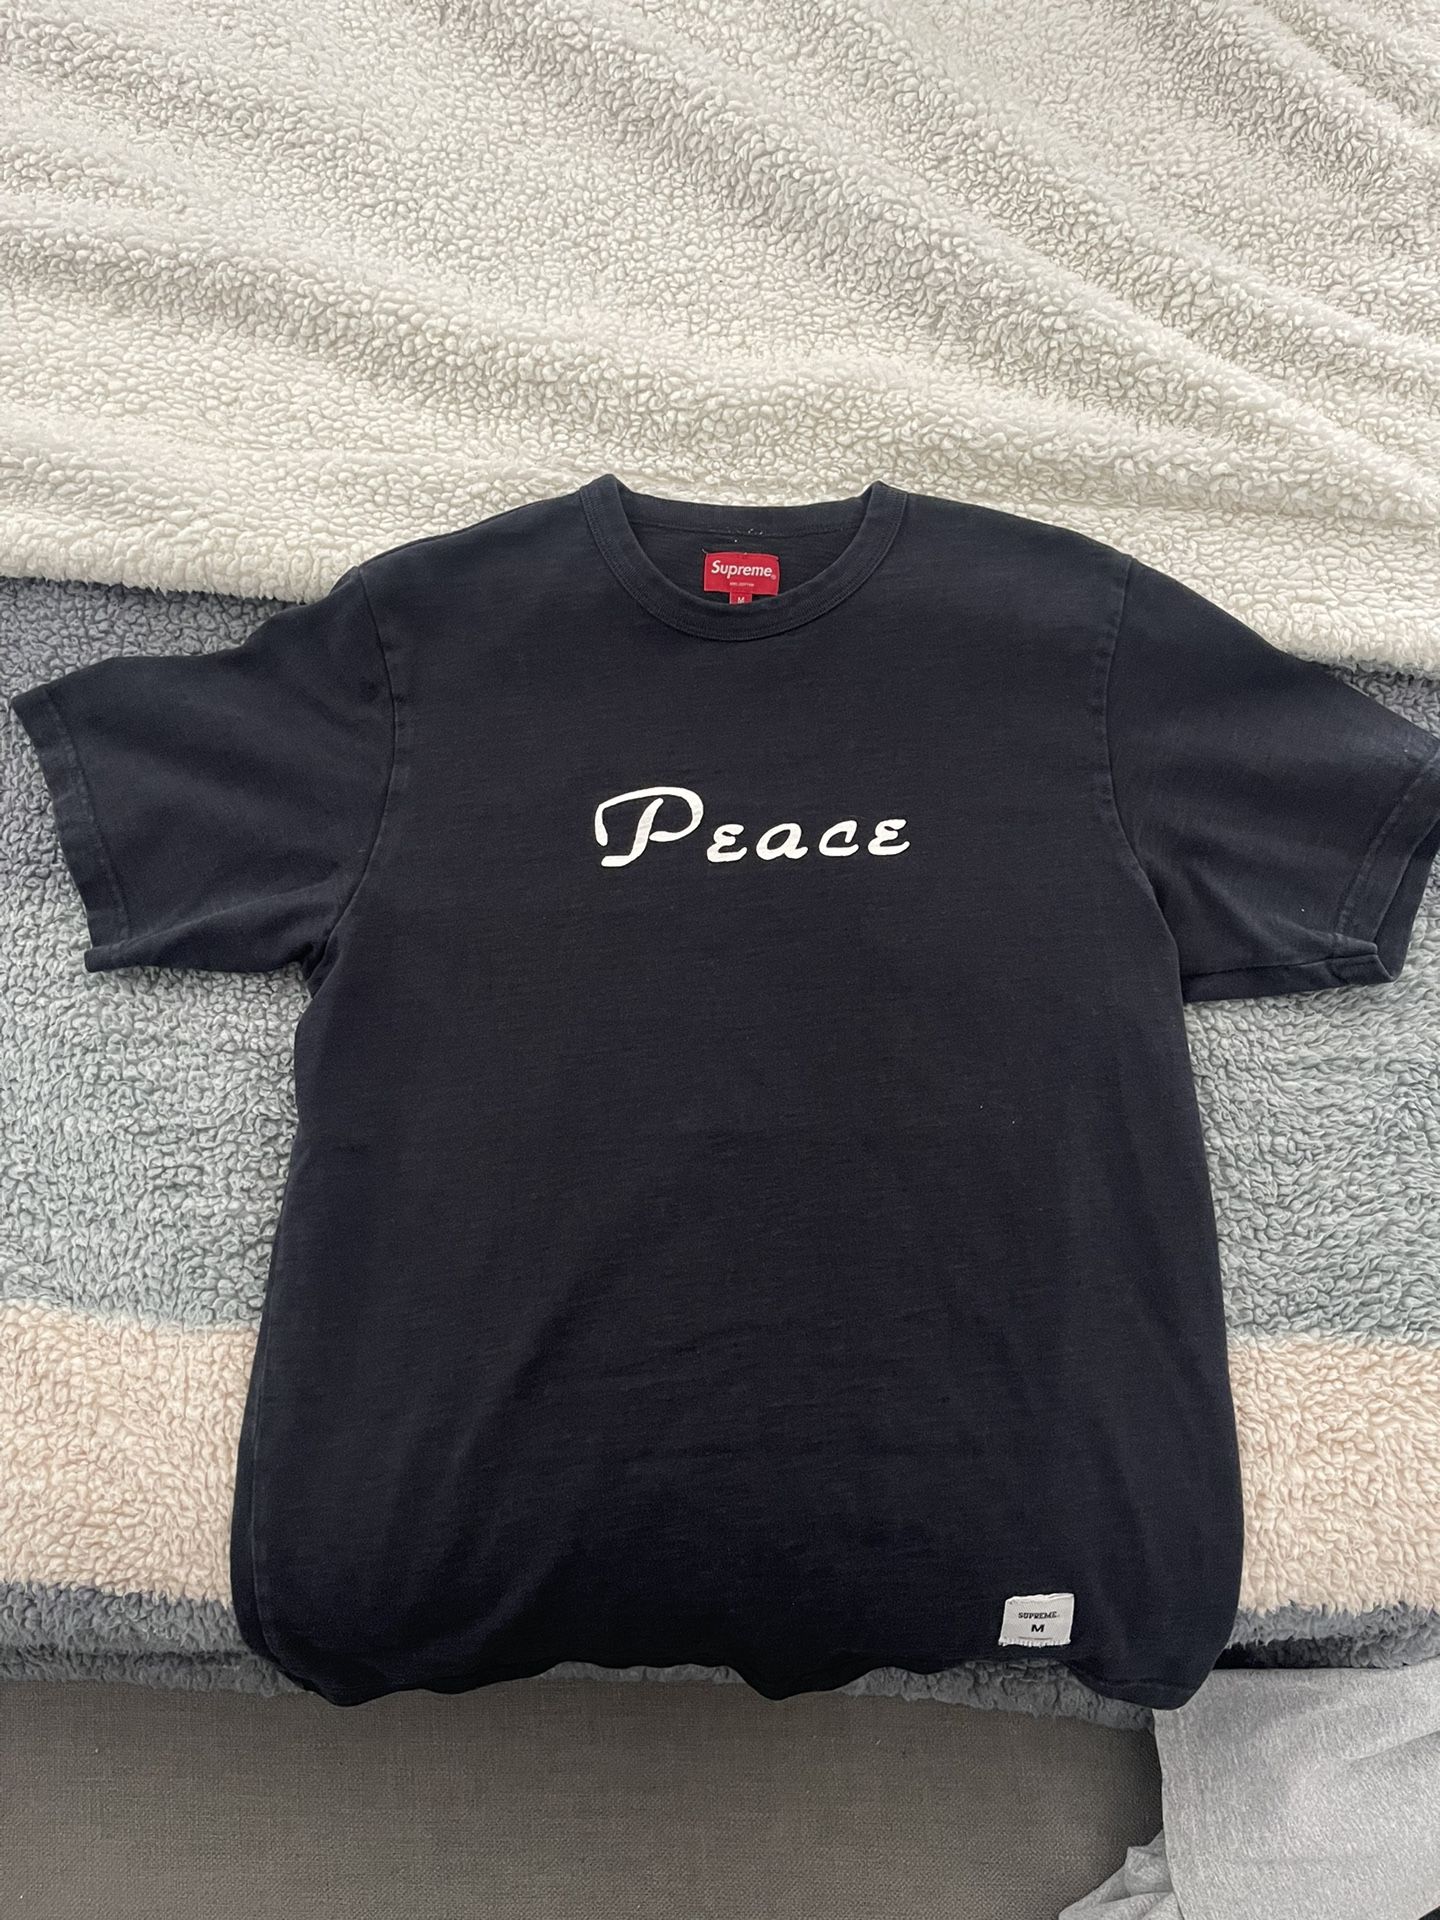 Supreme Peace T-shirt (Size Medium)